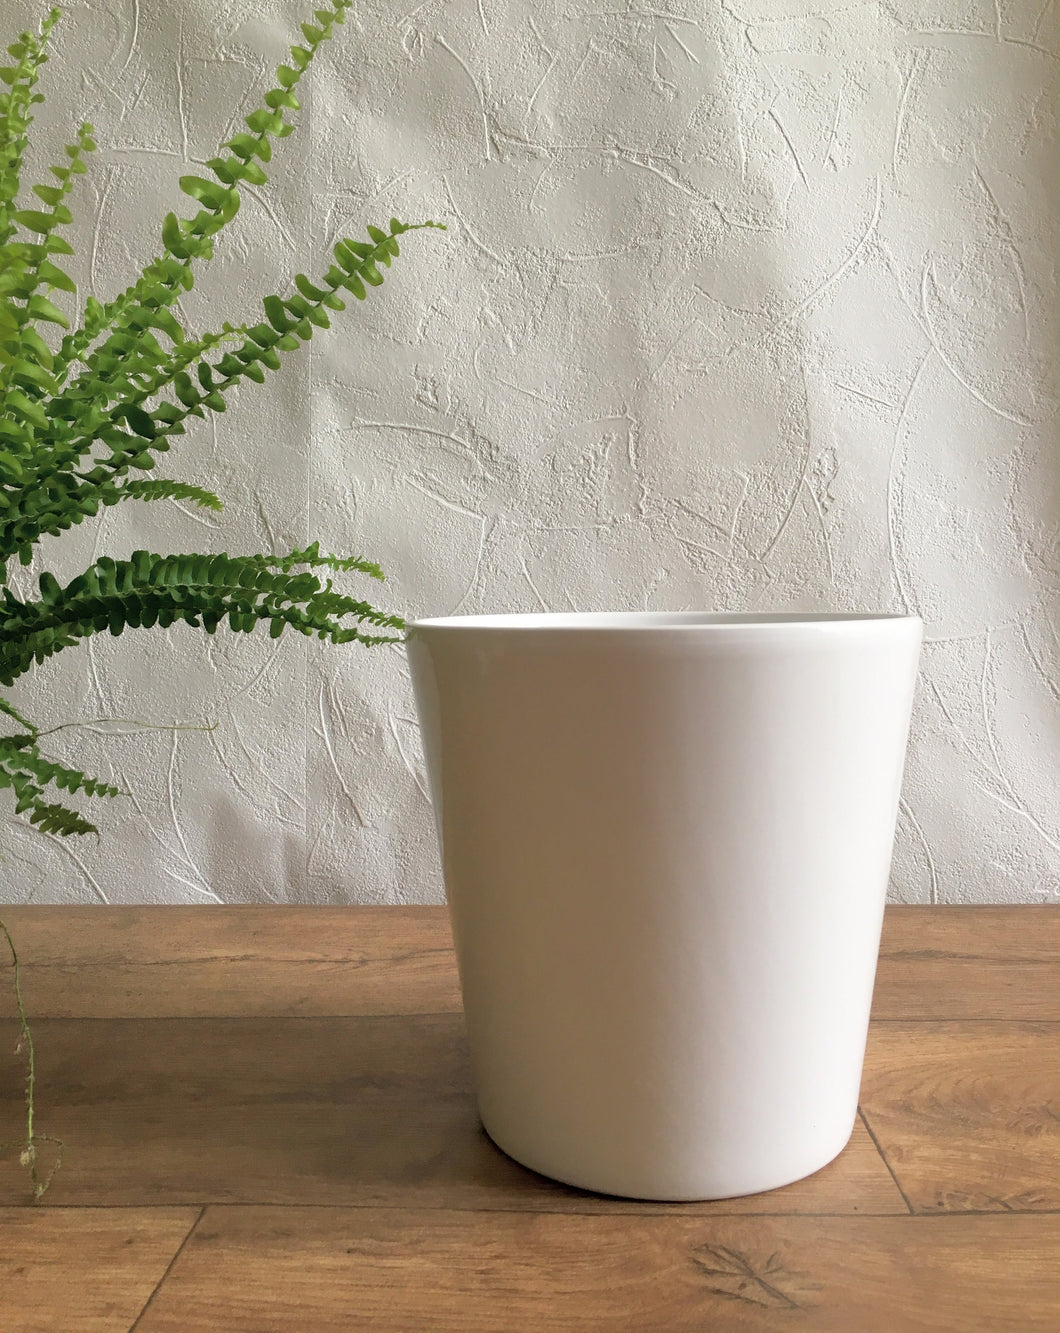 Classic white plant pot